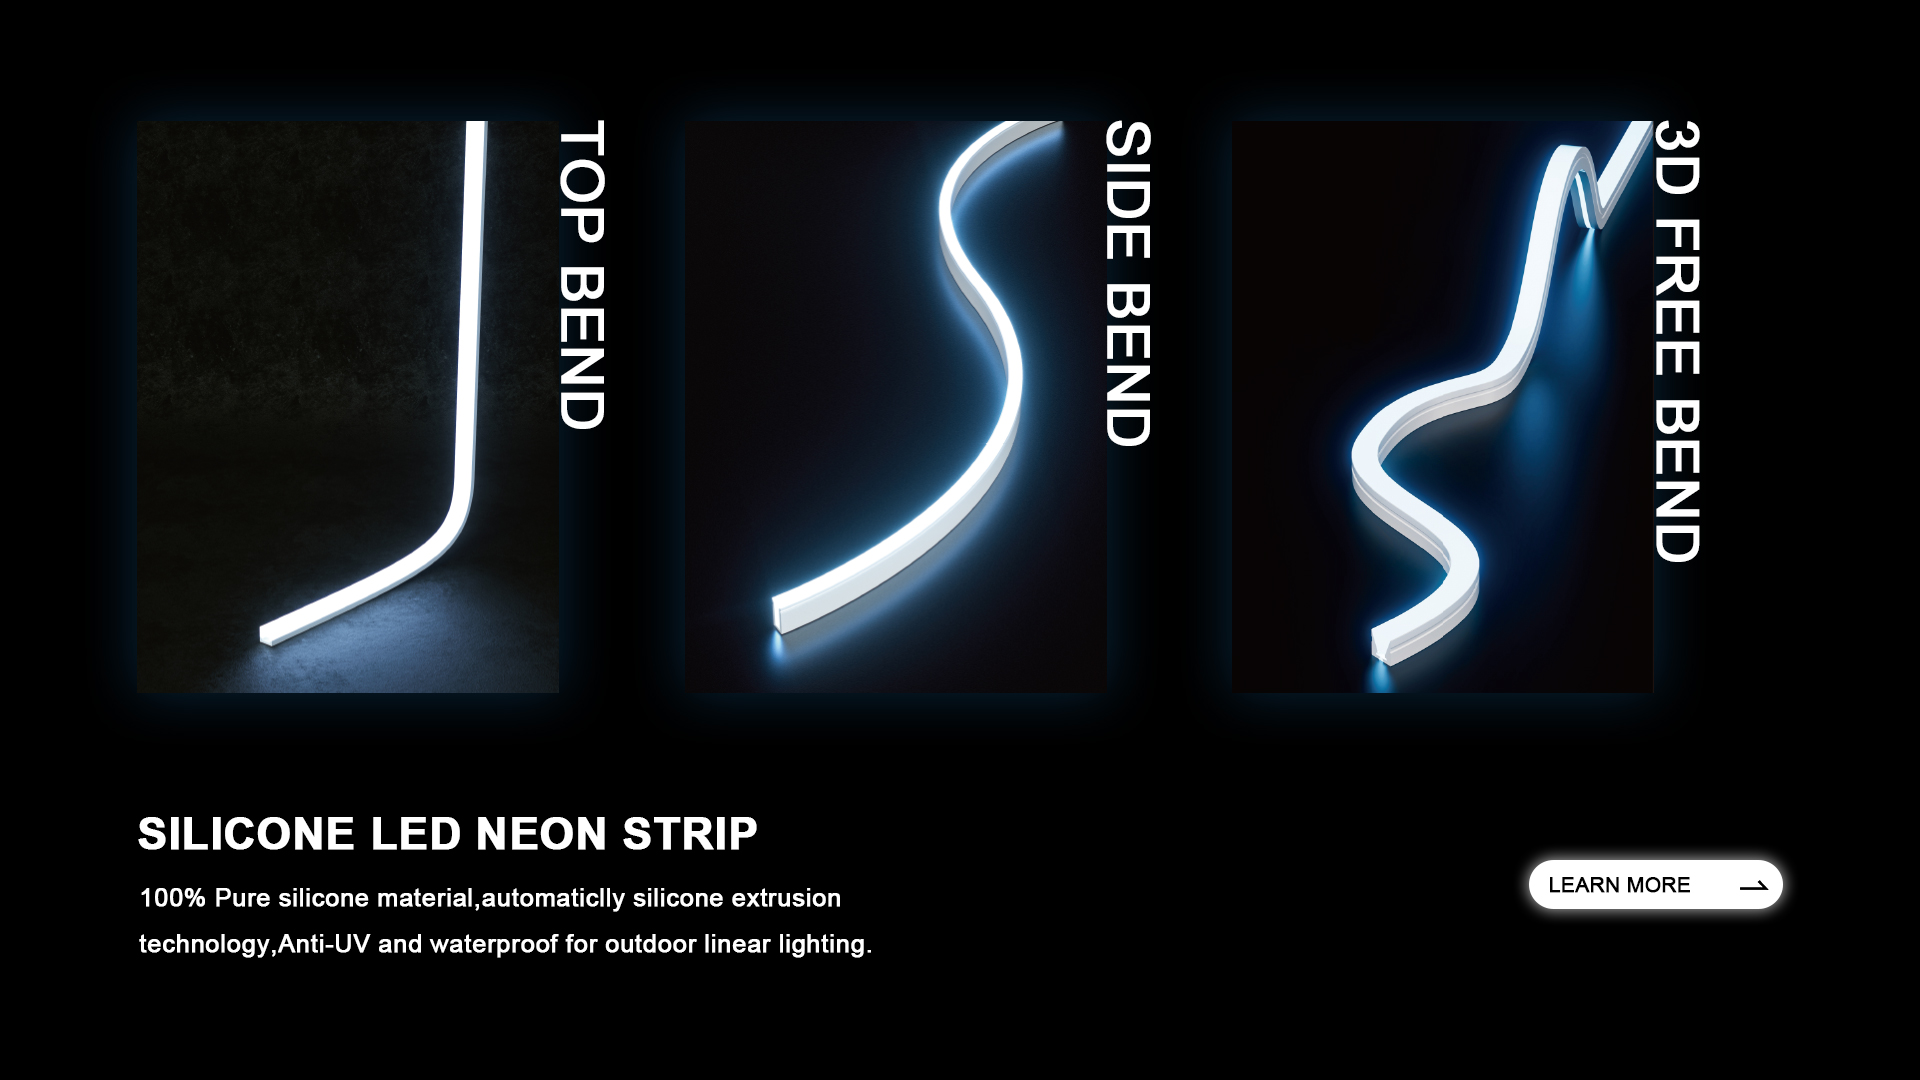 Silicone LED Neon Strip